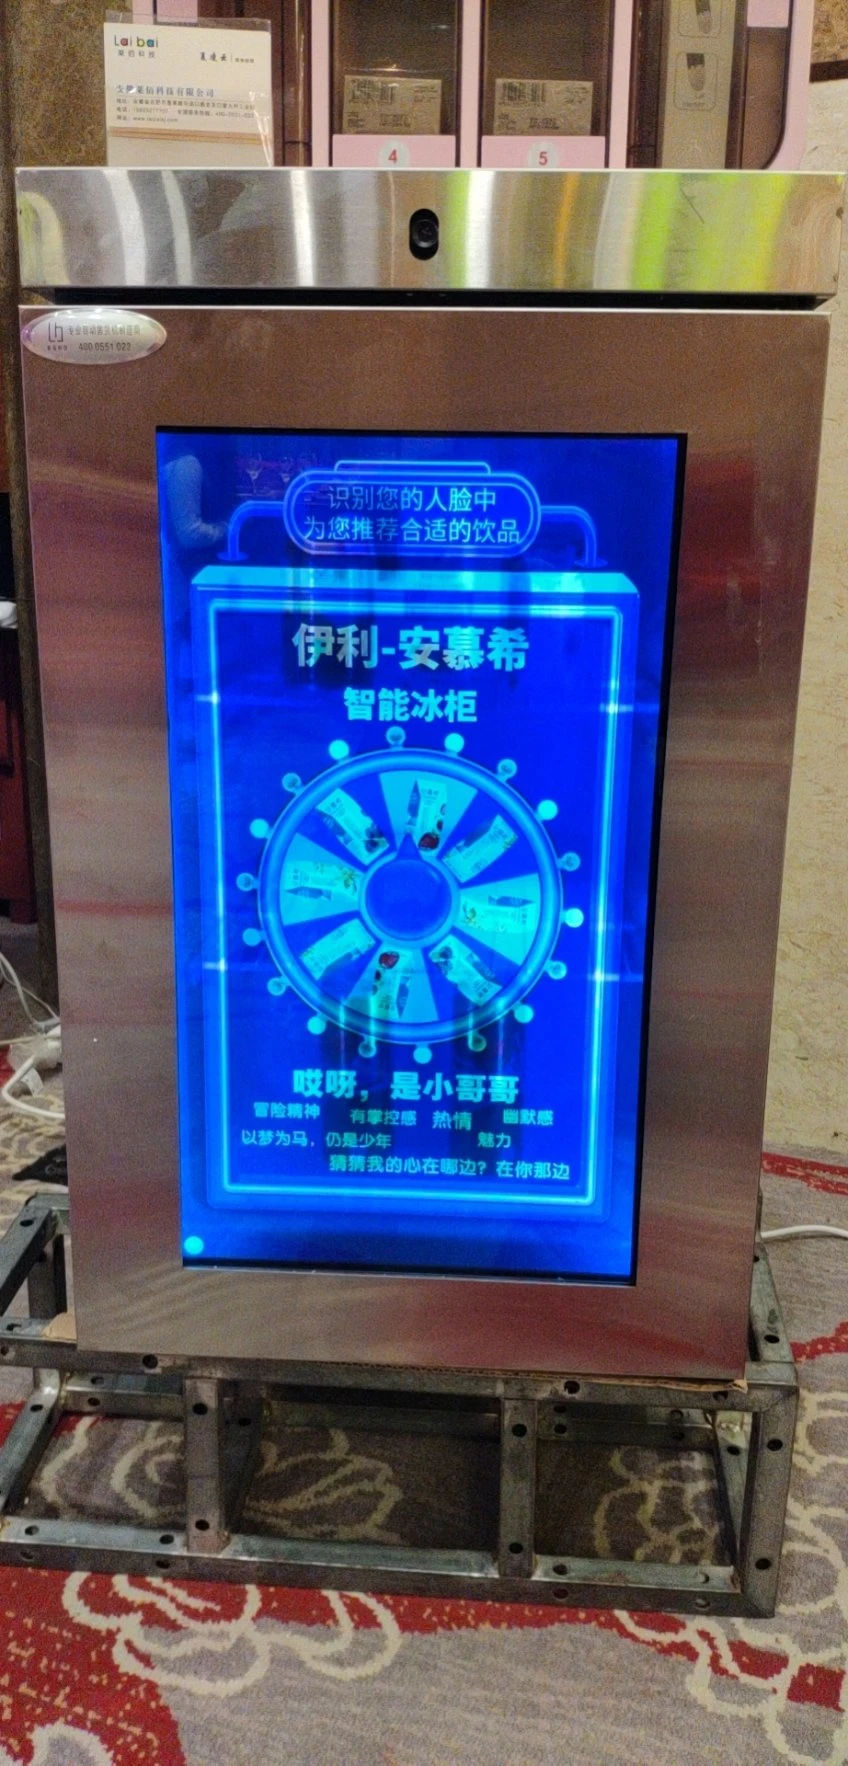 37inch Transparent LCD Door Small Fridge /Tlcd Cooler, Best for Advertising